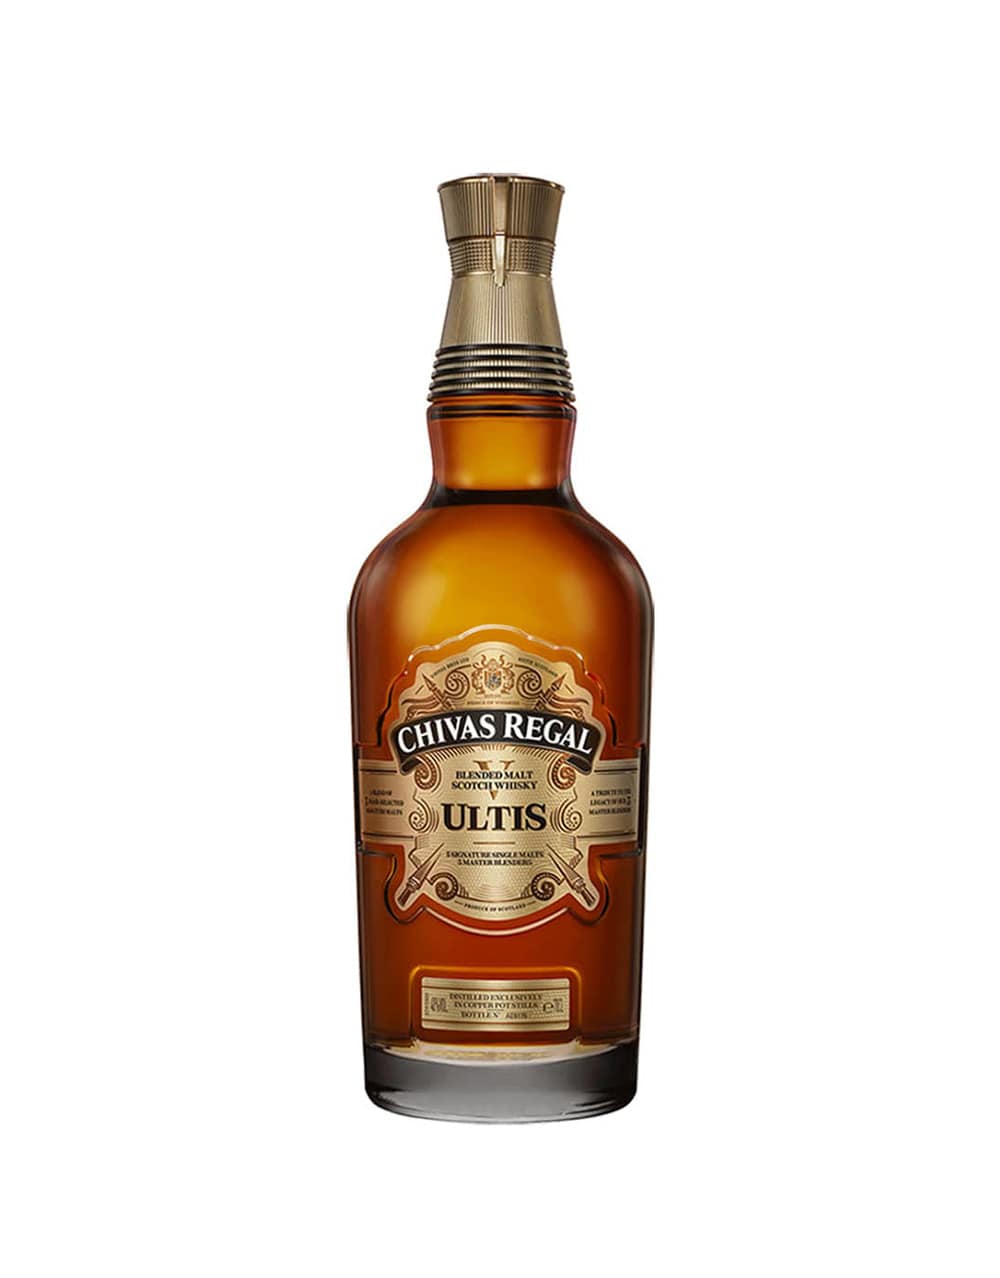 https://royalbatch.com/upload//products/1/chivas-regal-ultis-scotch-whisky_RoyalBatch_ZA9ysNOtbKNr.jpg